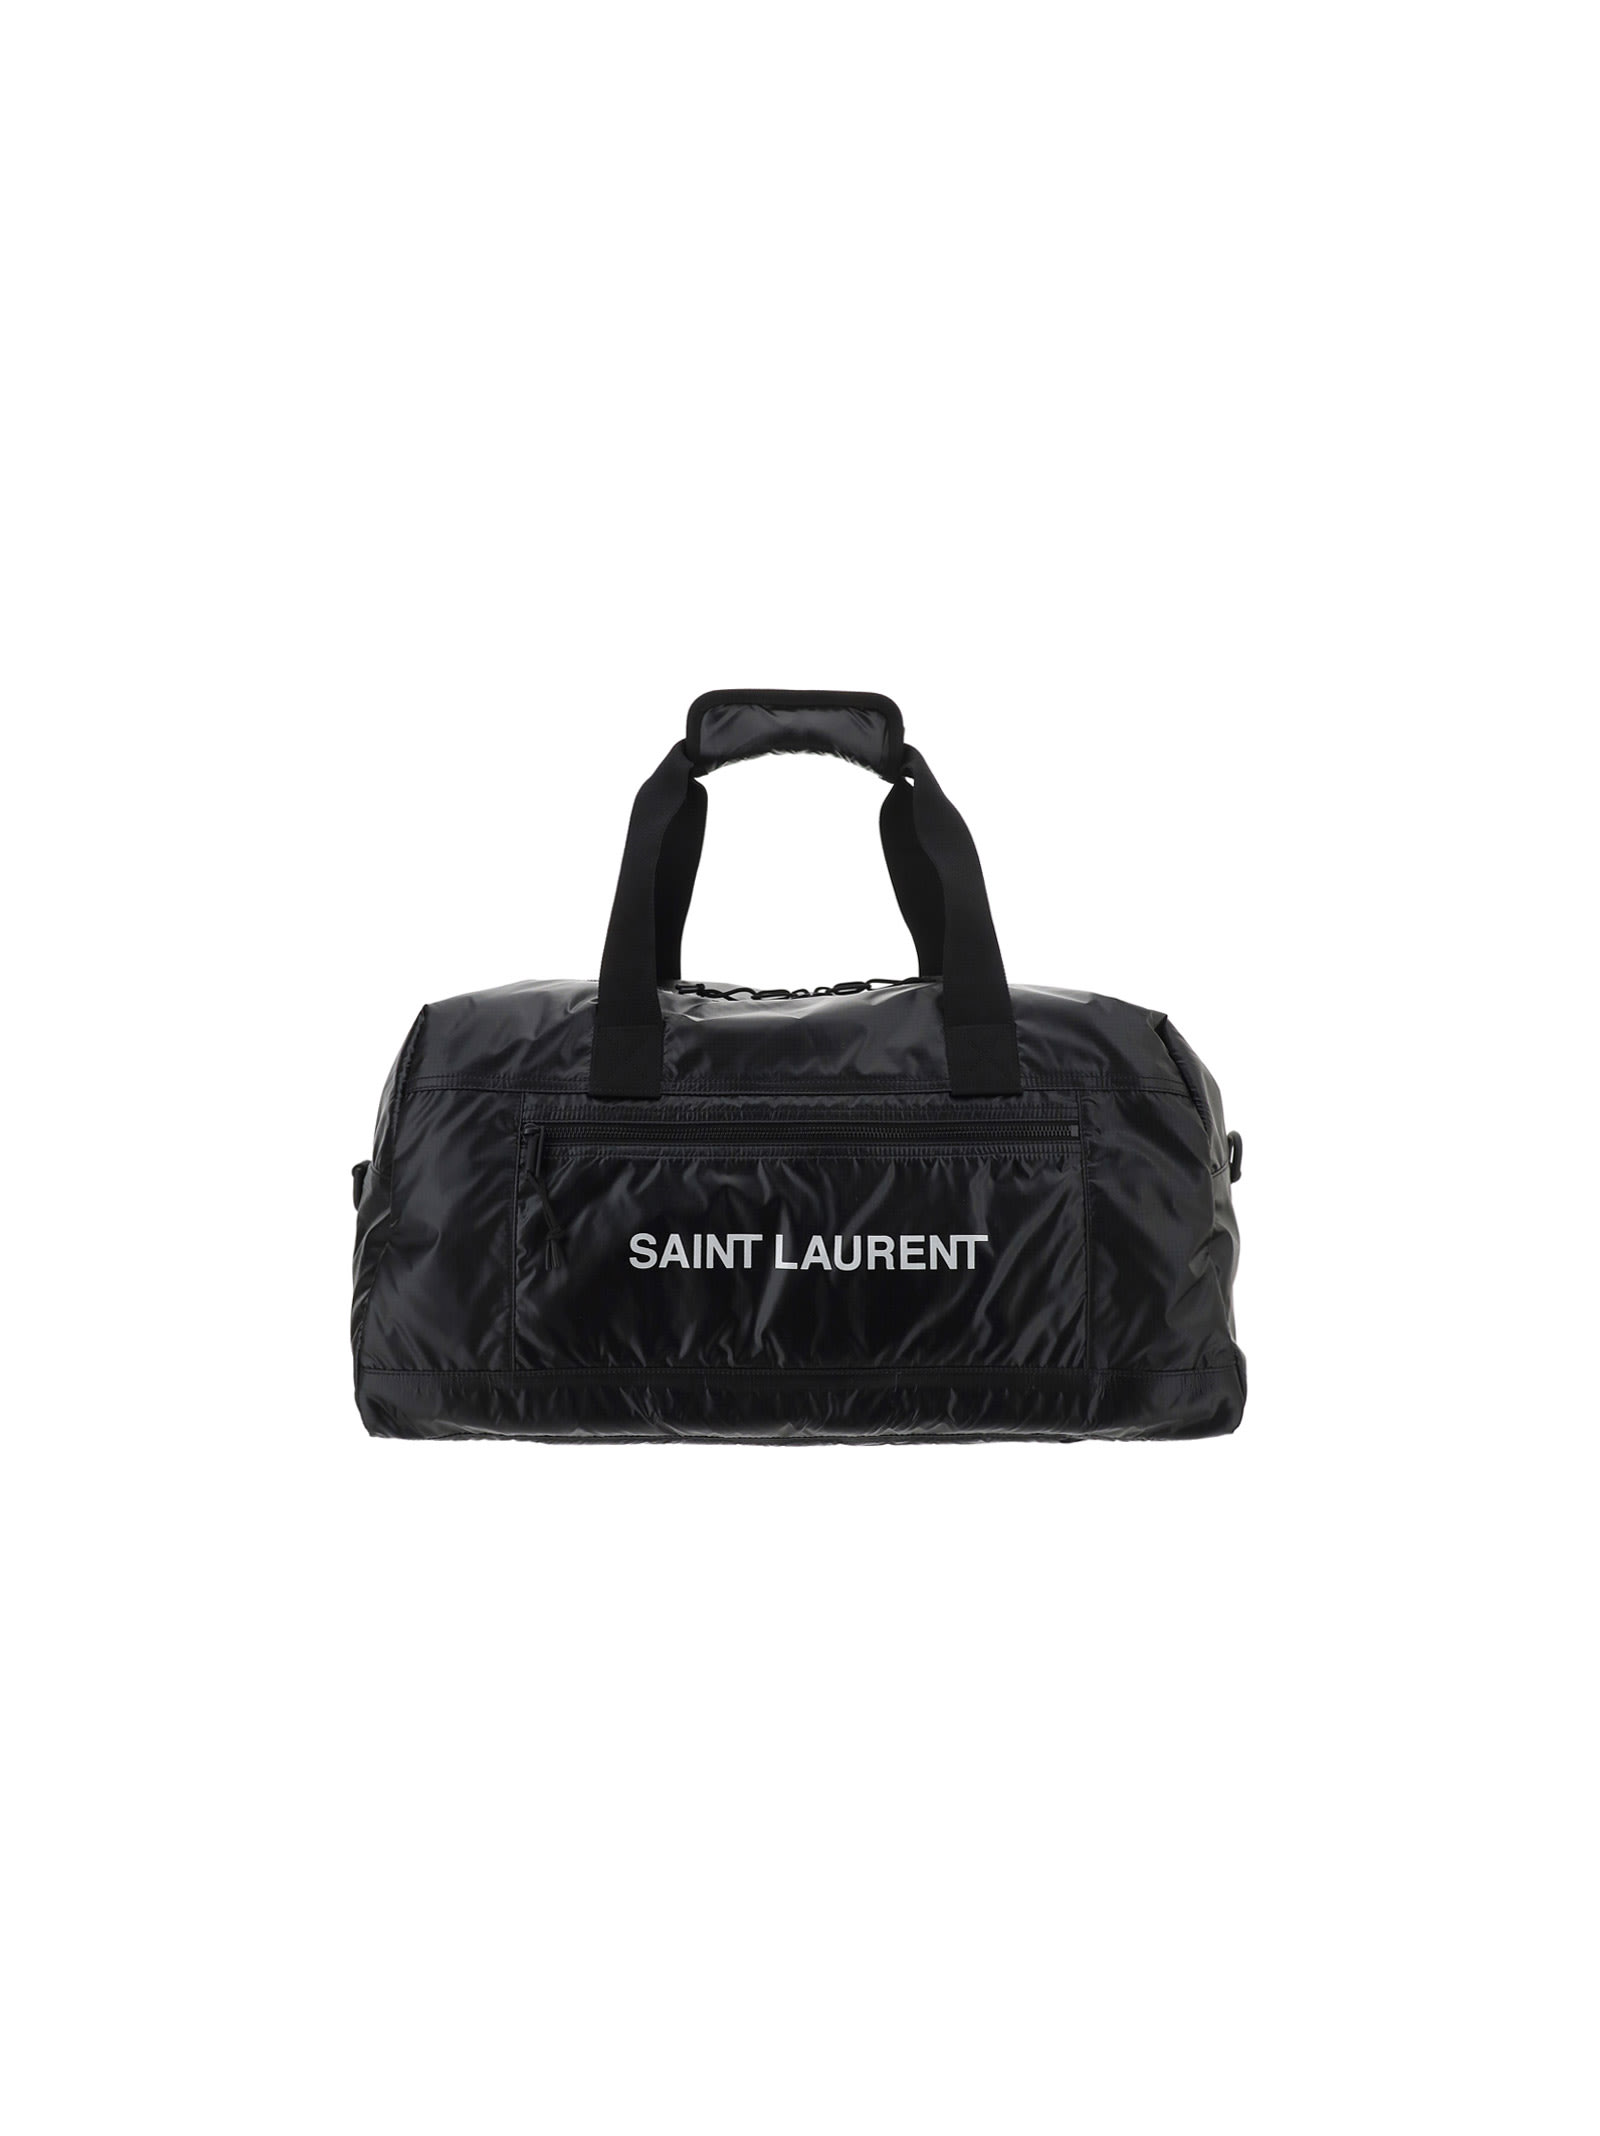 Saint Laurent Duffle Bag